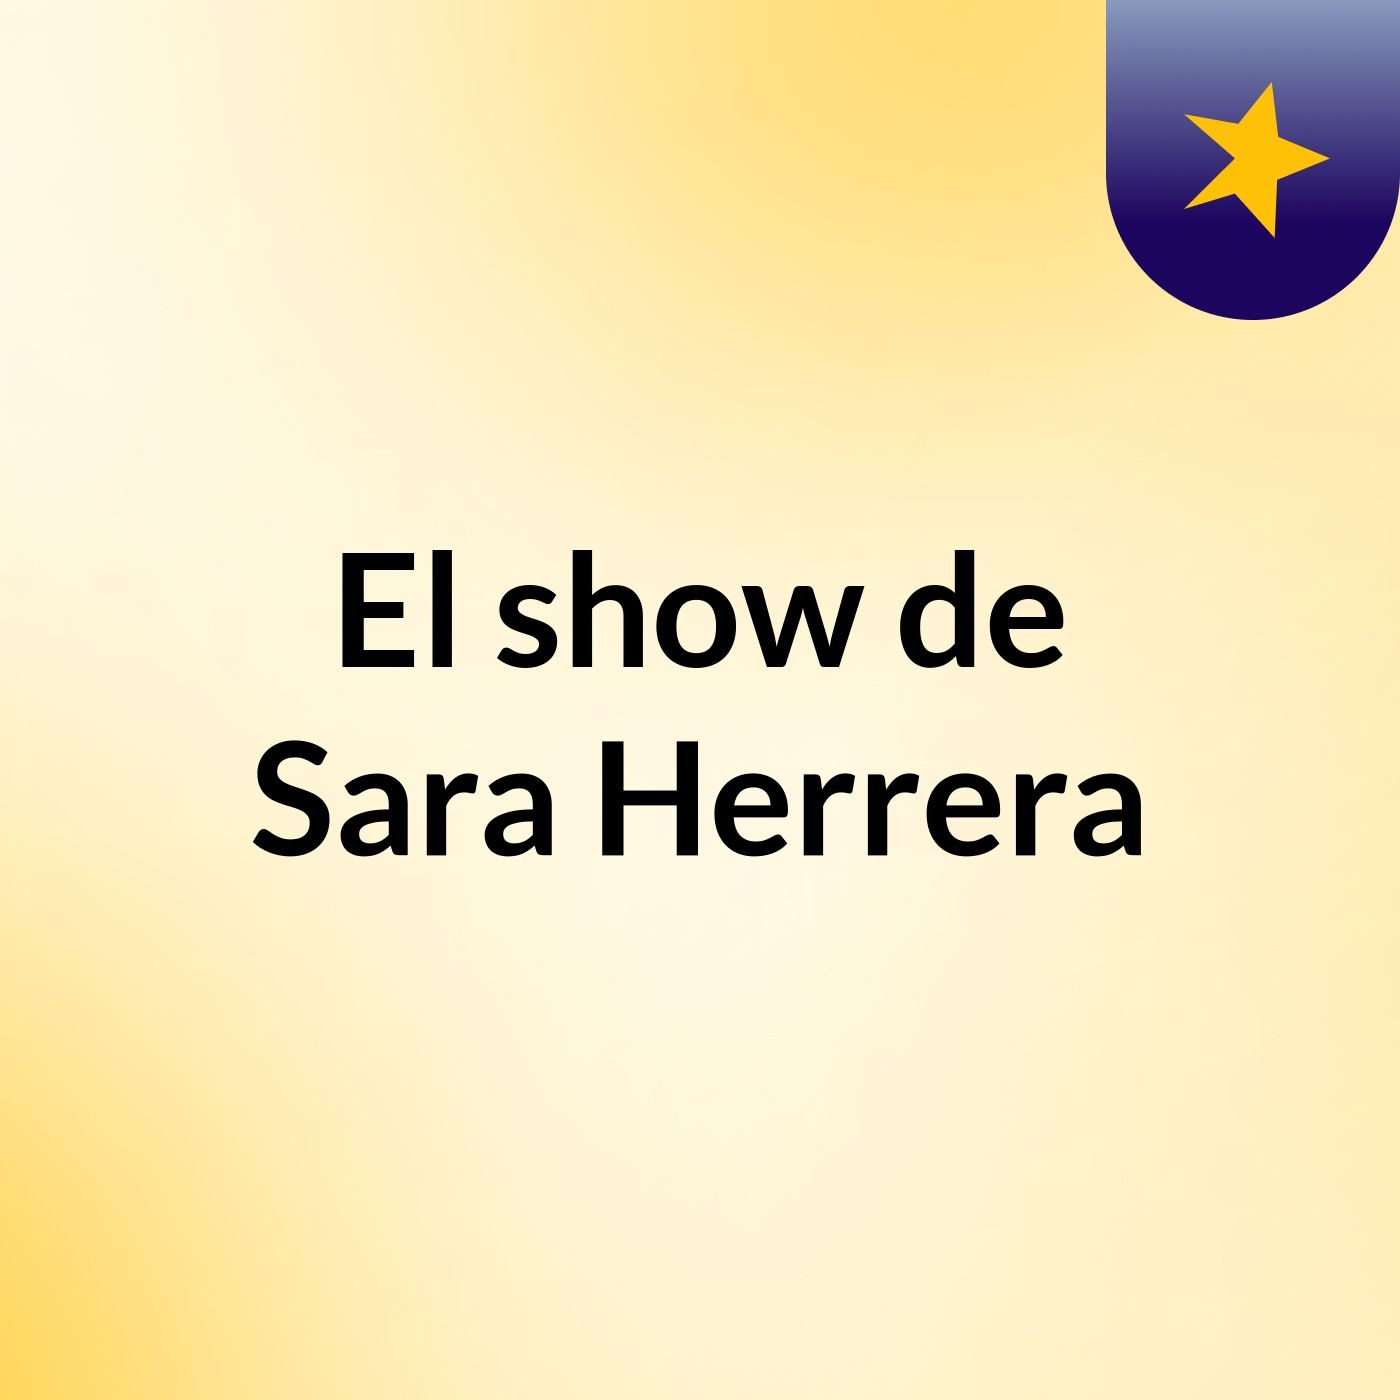 El show de Sara Herrera